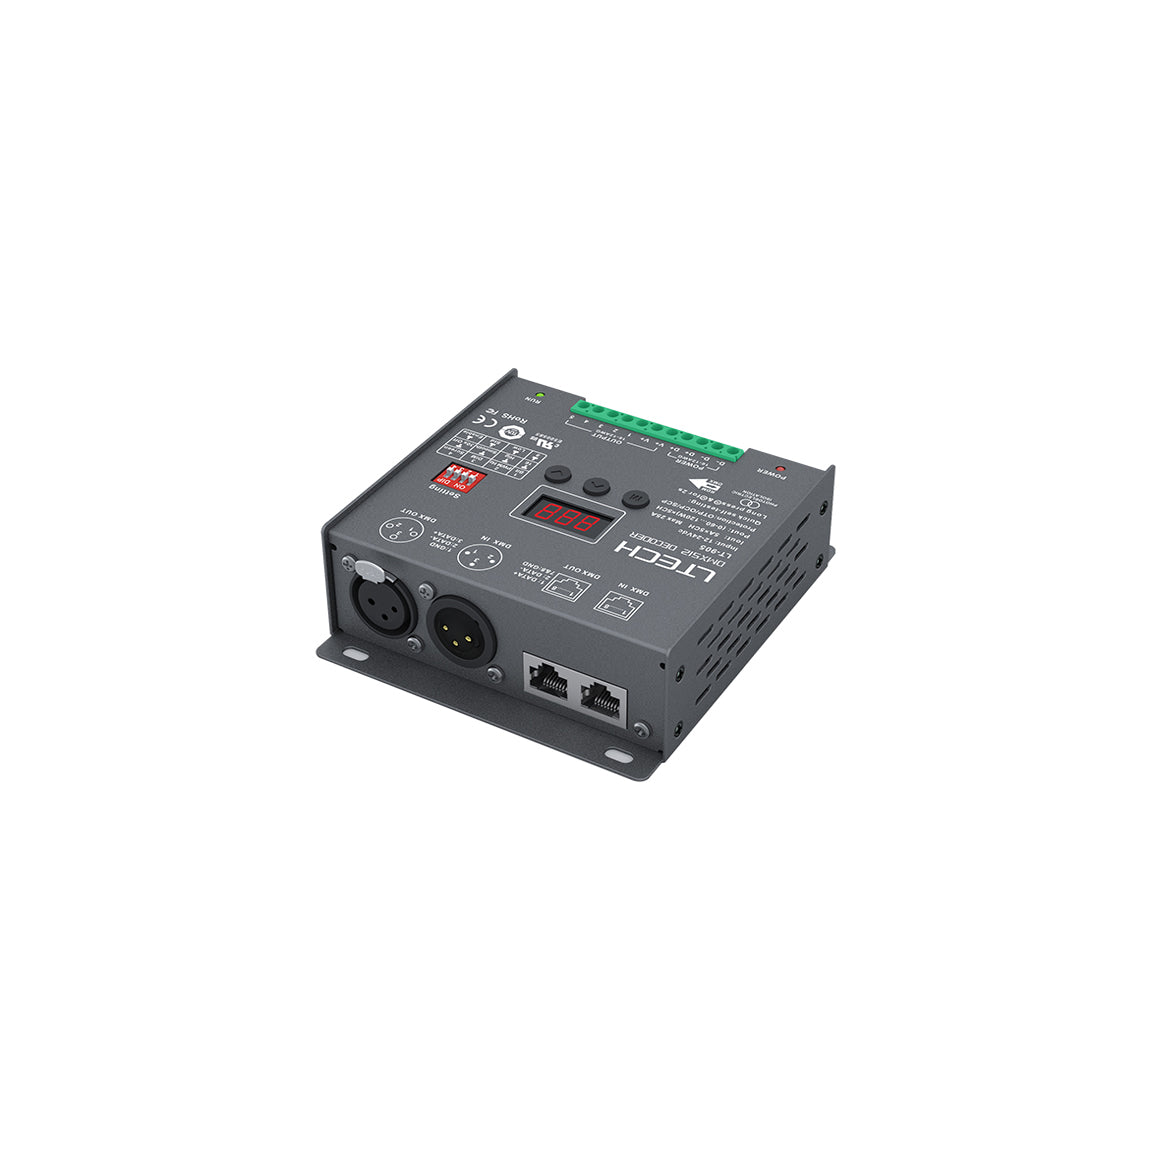 Ltech LT-905 Constant Voltage Decoder - DMX/RDM